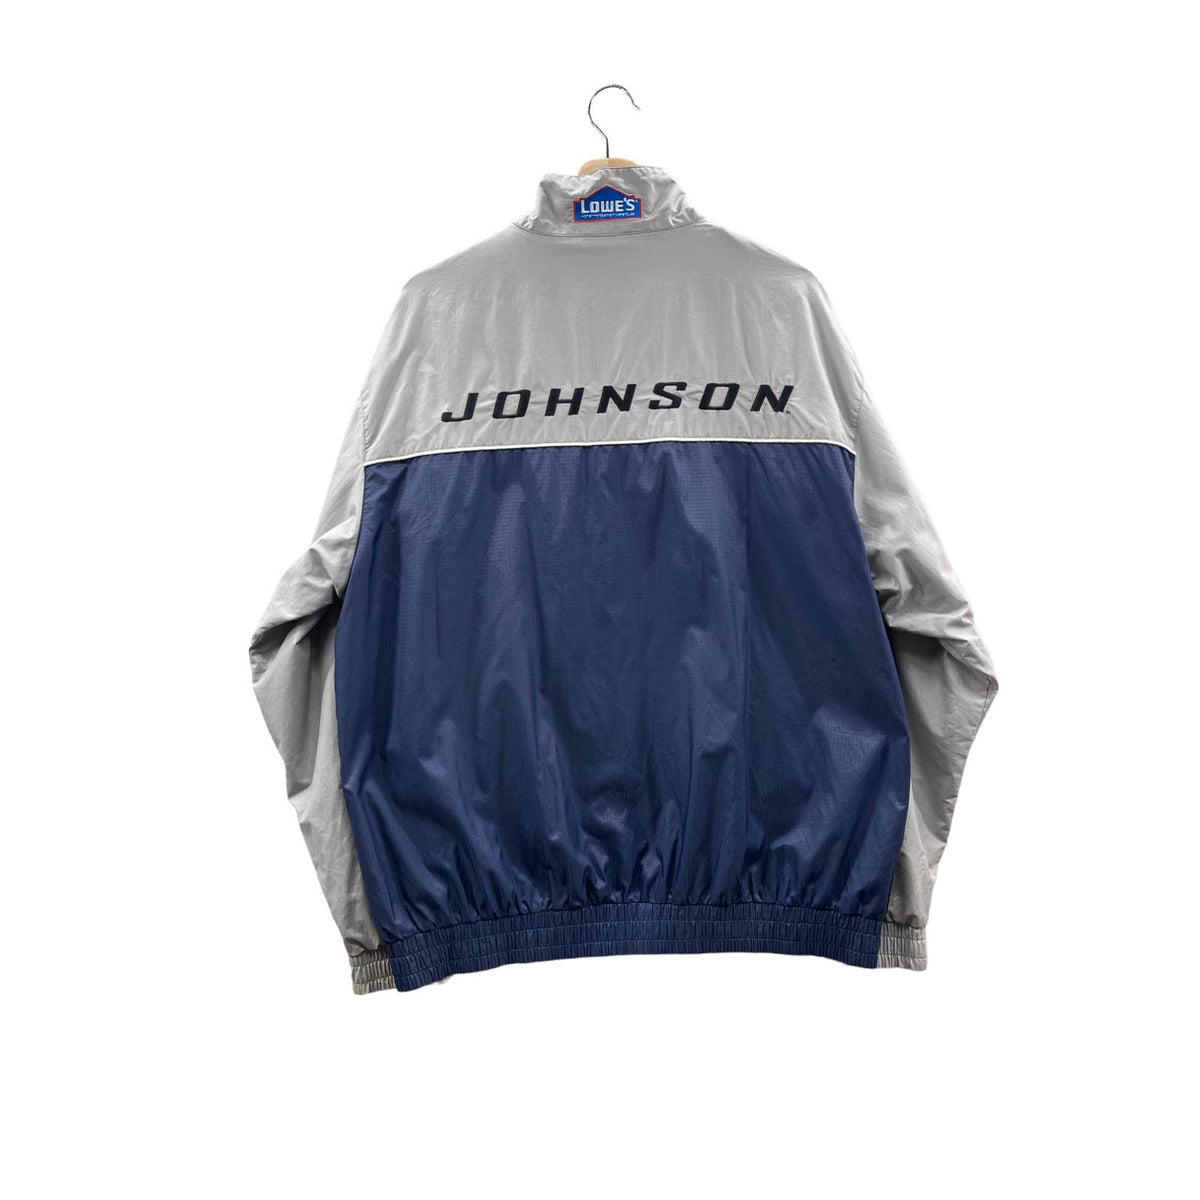 Vintage 2000's Chase Authentics Jimmie Johnson Full Zip Windbreaker Jacket